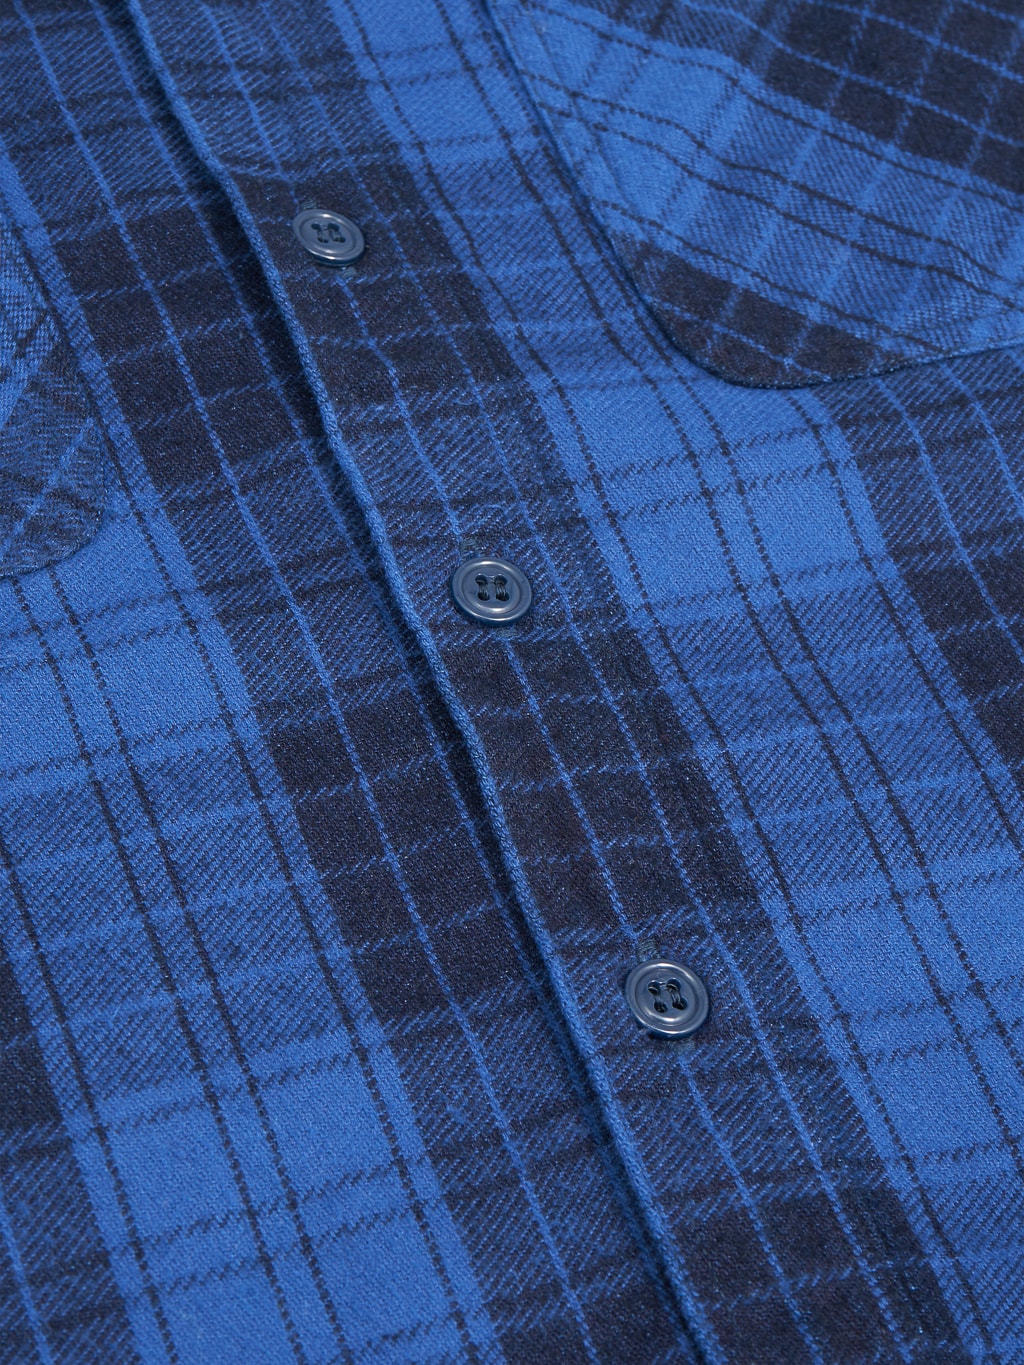 Momotaro original indigo twill check flannel shirt front buttons